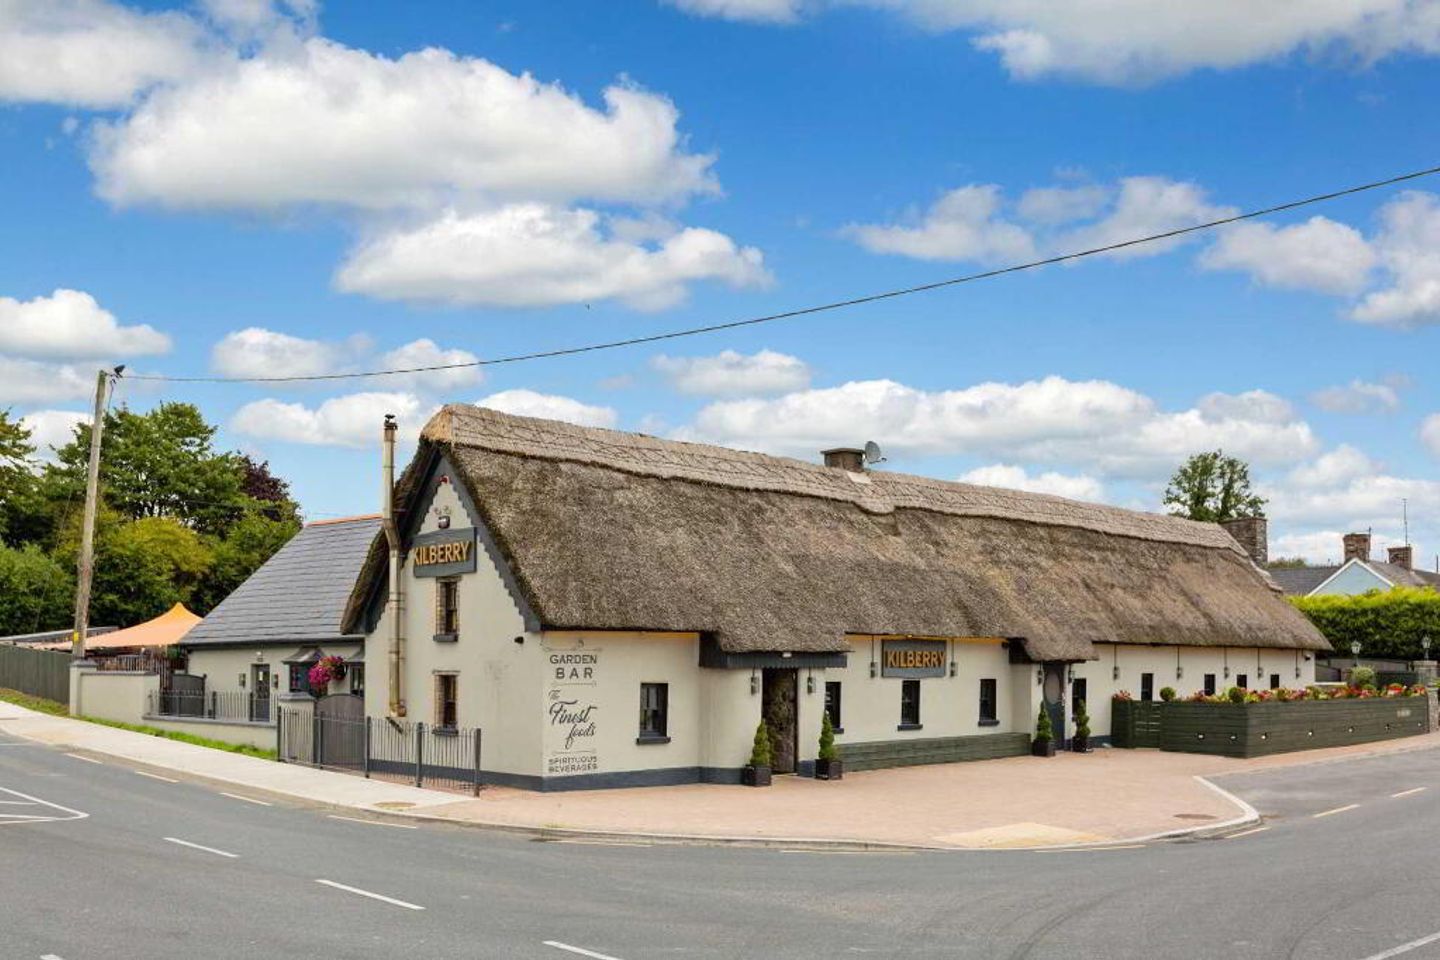 The Kilberry Pub,& Kitchen, Kilberry, Navan, Co. Meath, C15PY79